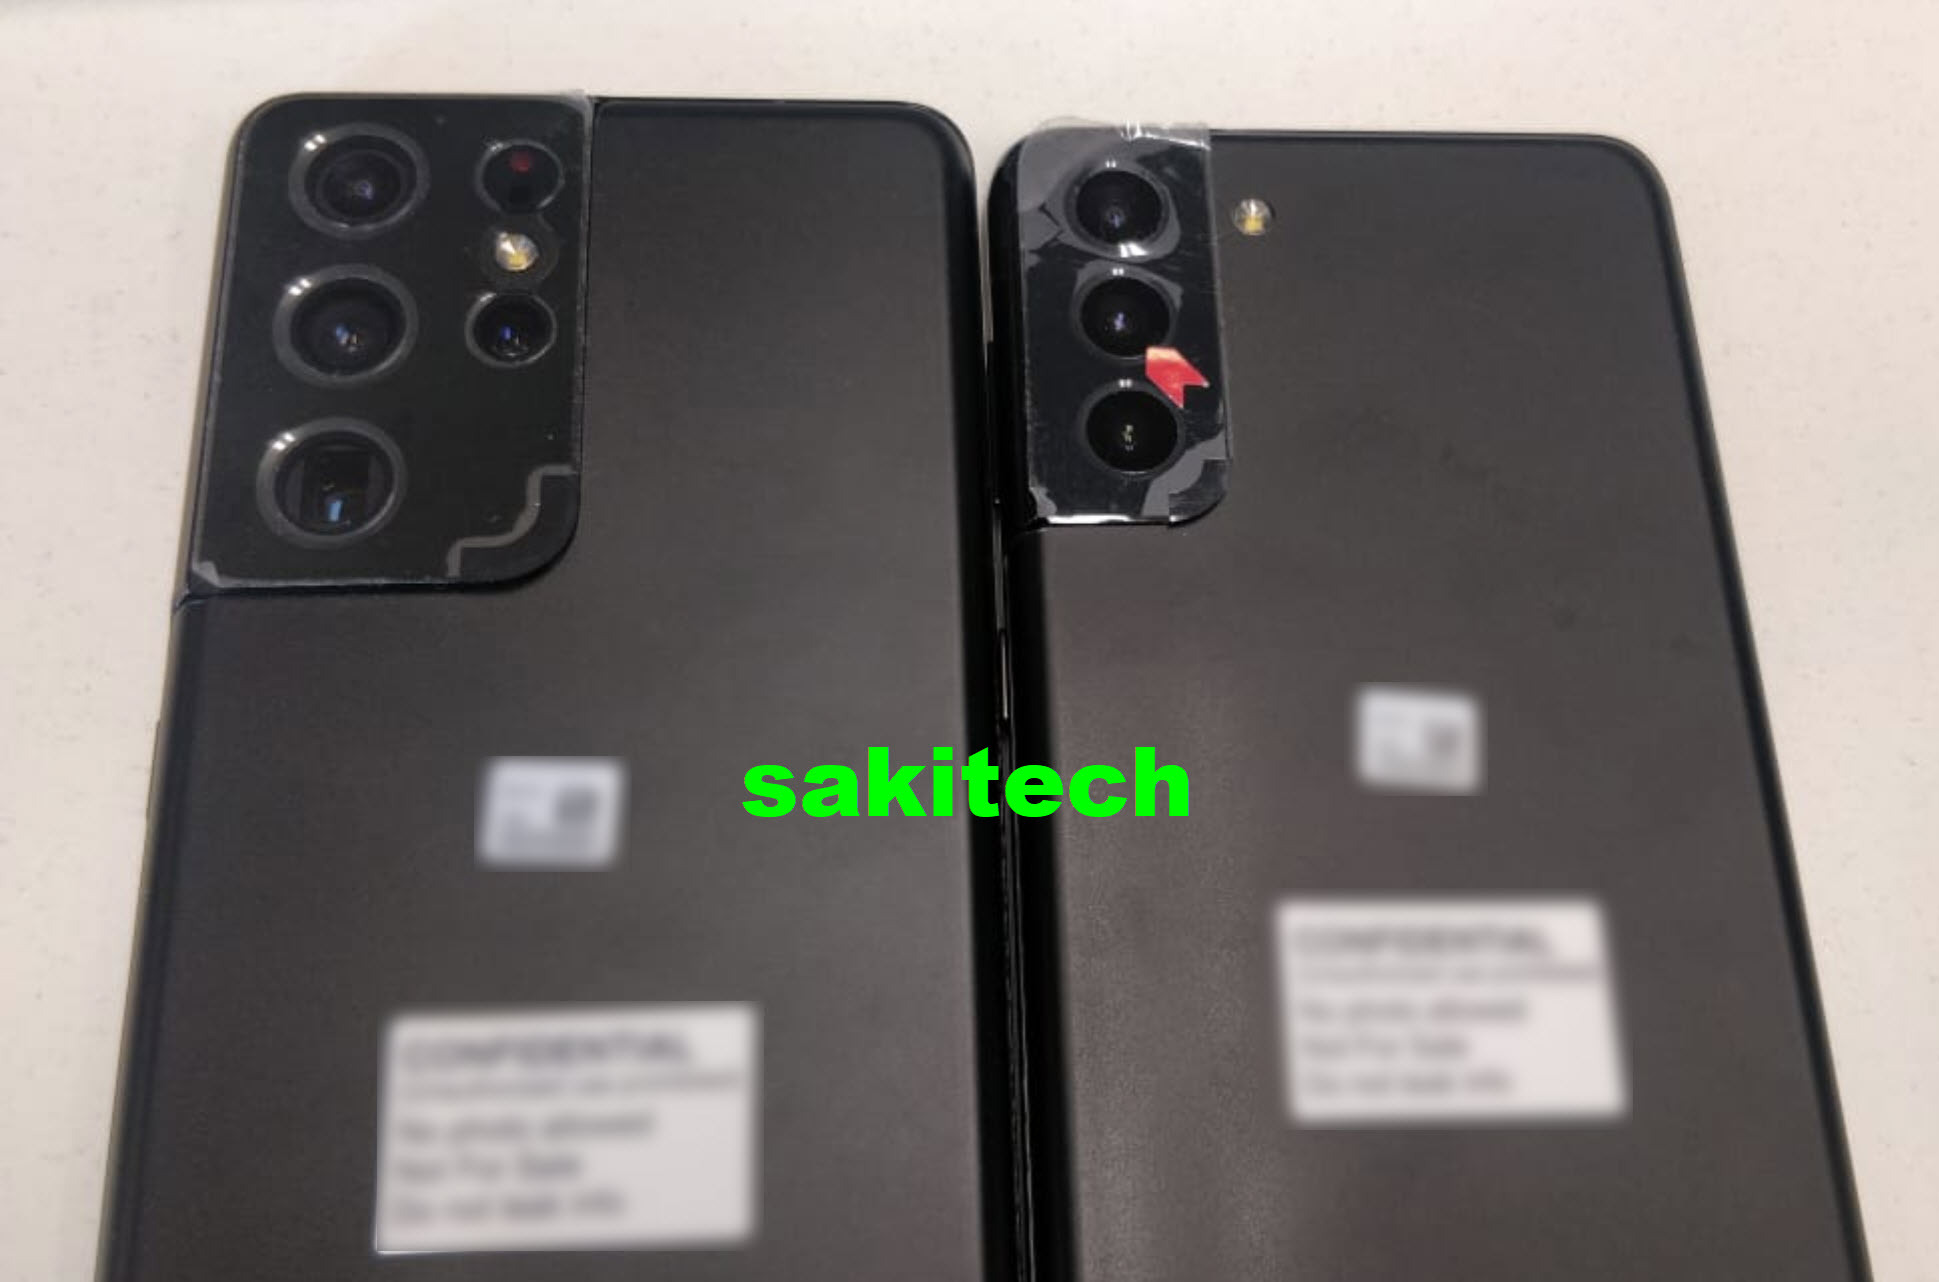 Samsung Galaxy S21 Ultra ve S21 Plus